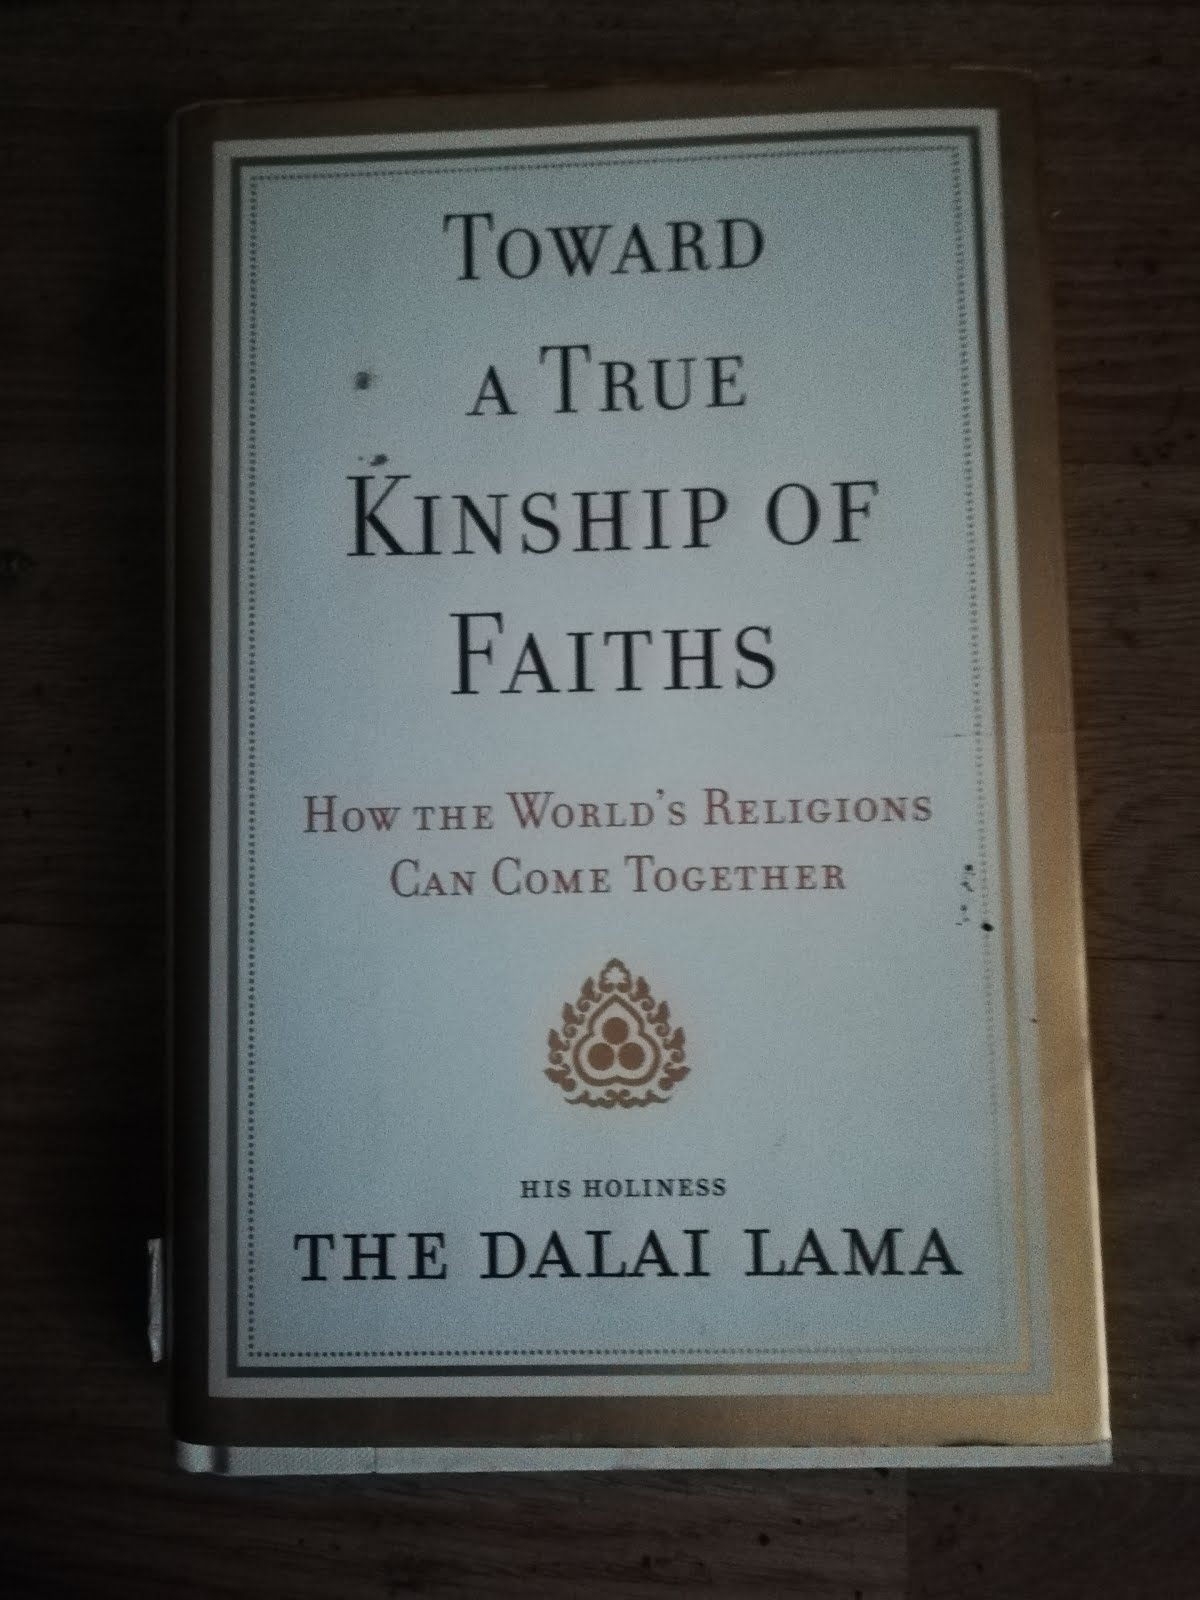 'Toward a True Kinship of Faiths' book by<br>His Holiness the Dalai Lama.